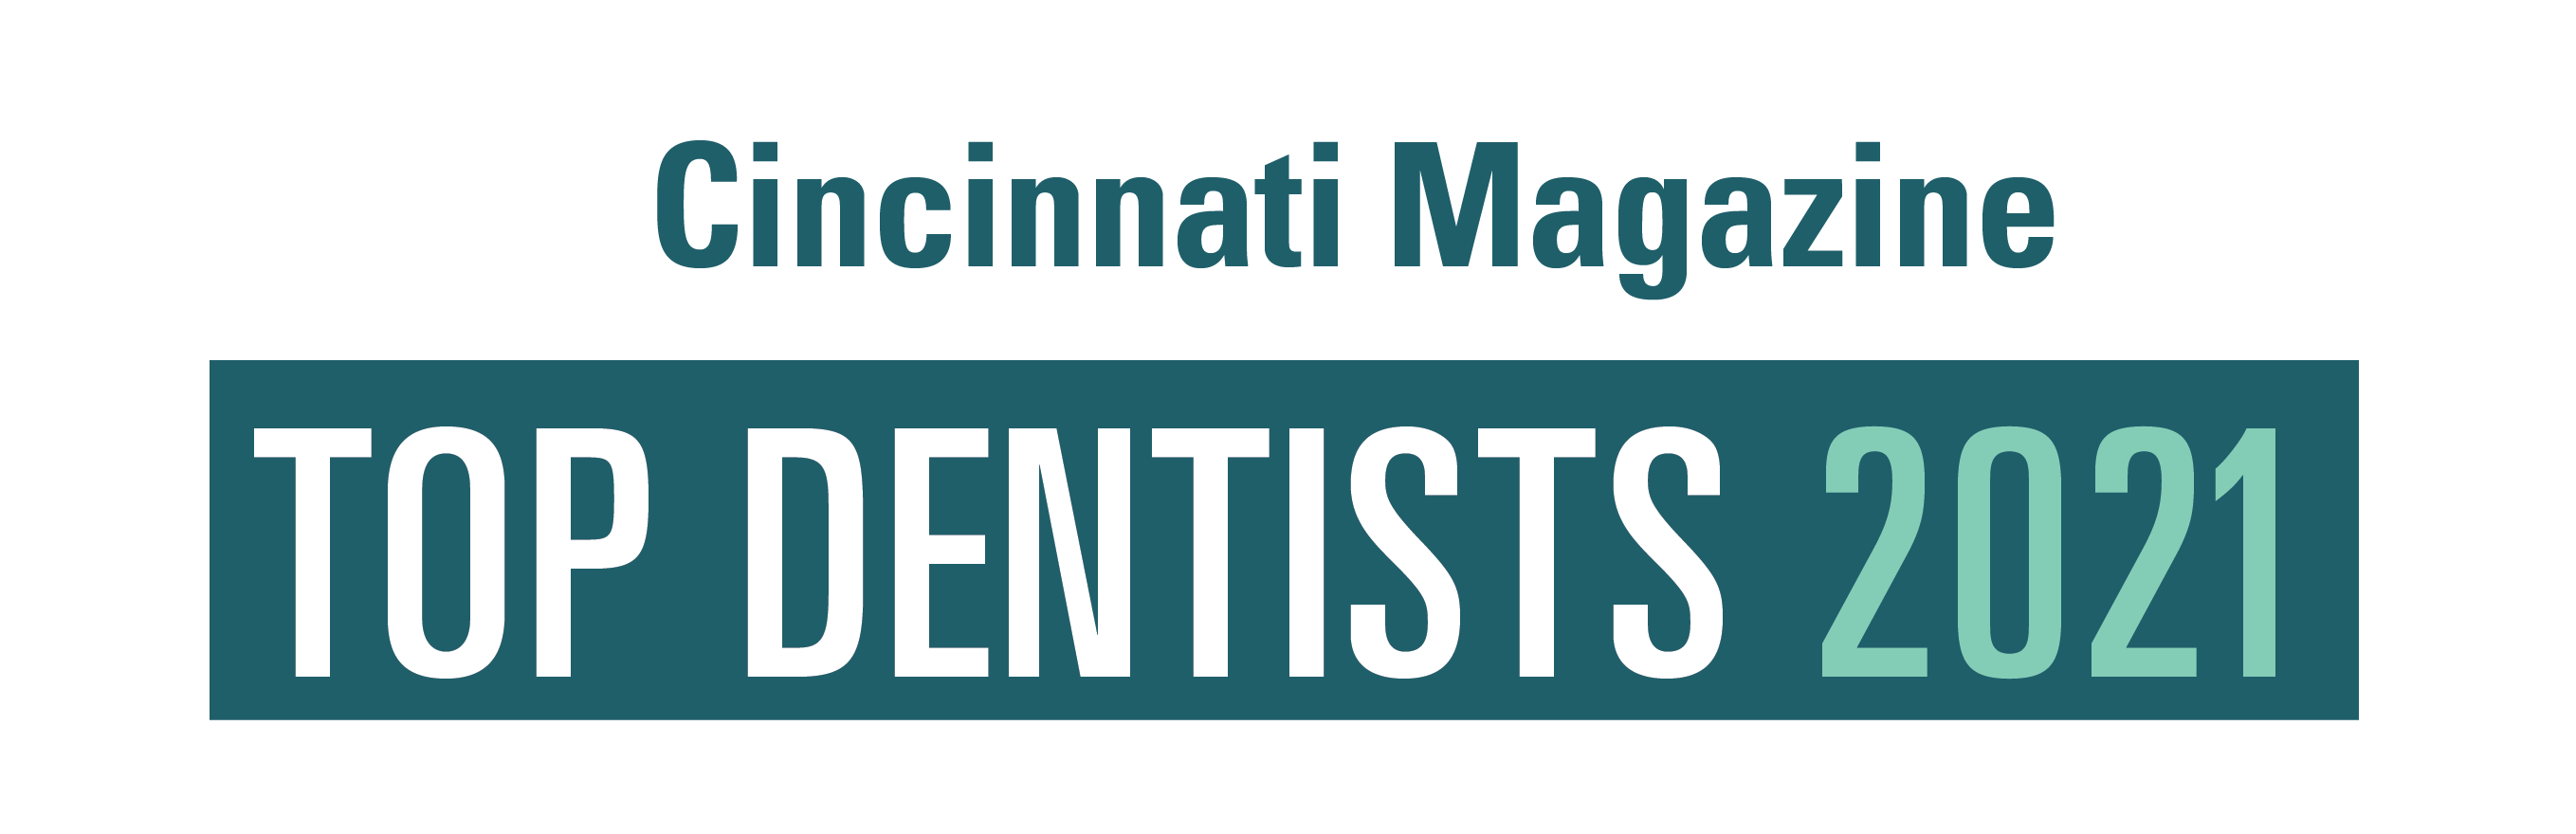 Cincinnati Magazine TOP DENTISTS 2021